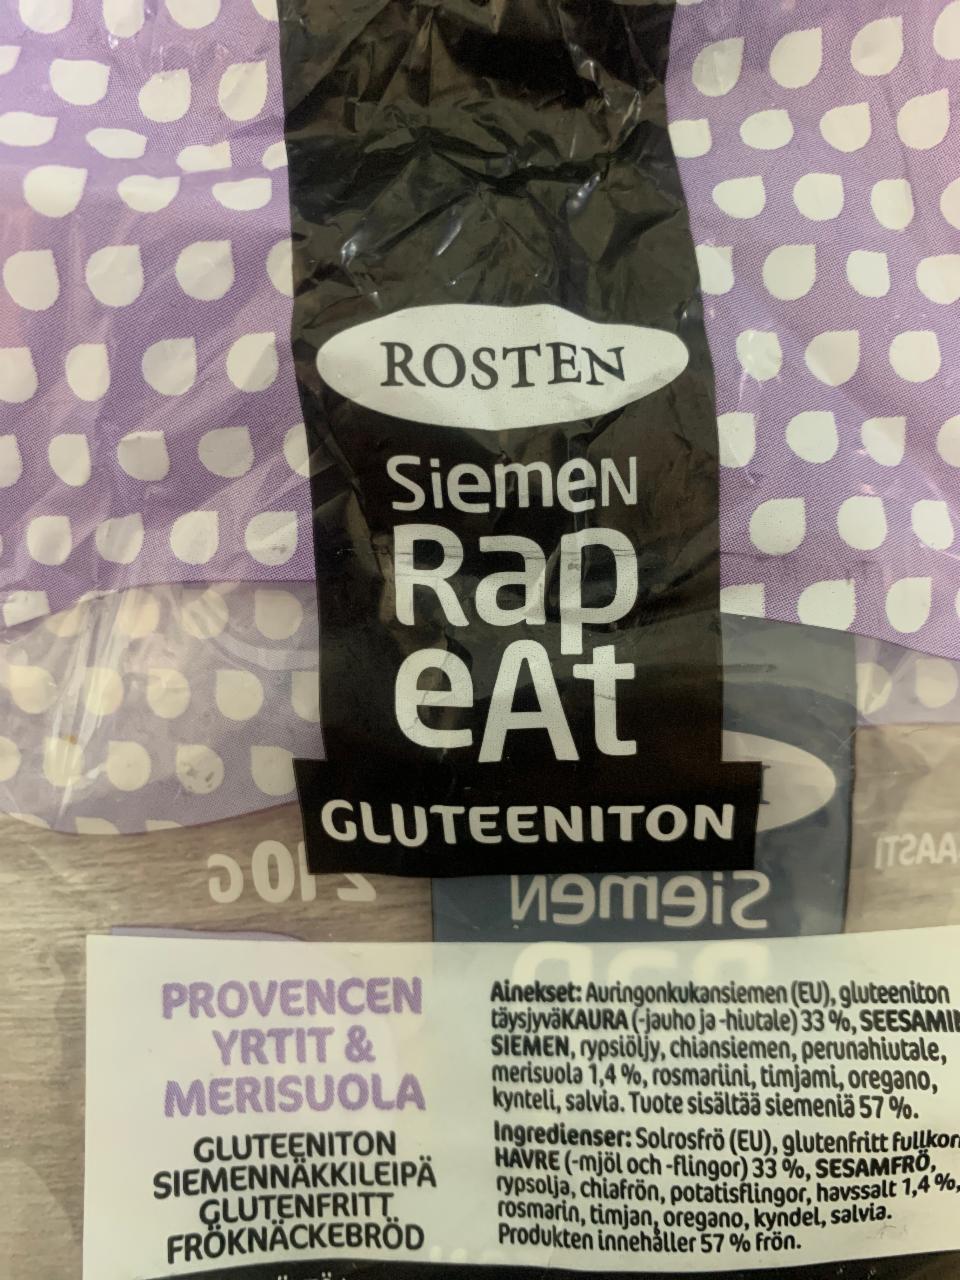 Fotografie - Siemenrapeat gluteeniton provencen yrtit & merisuola Rosten